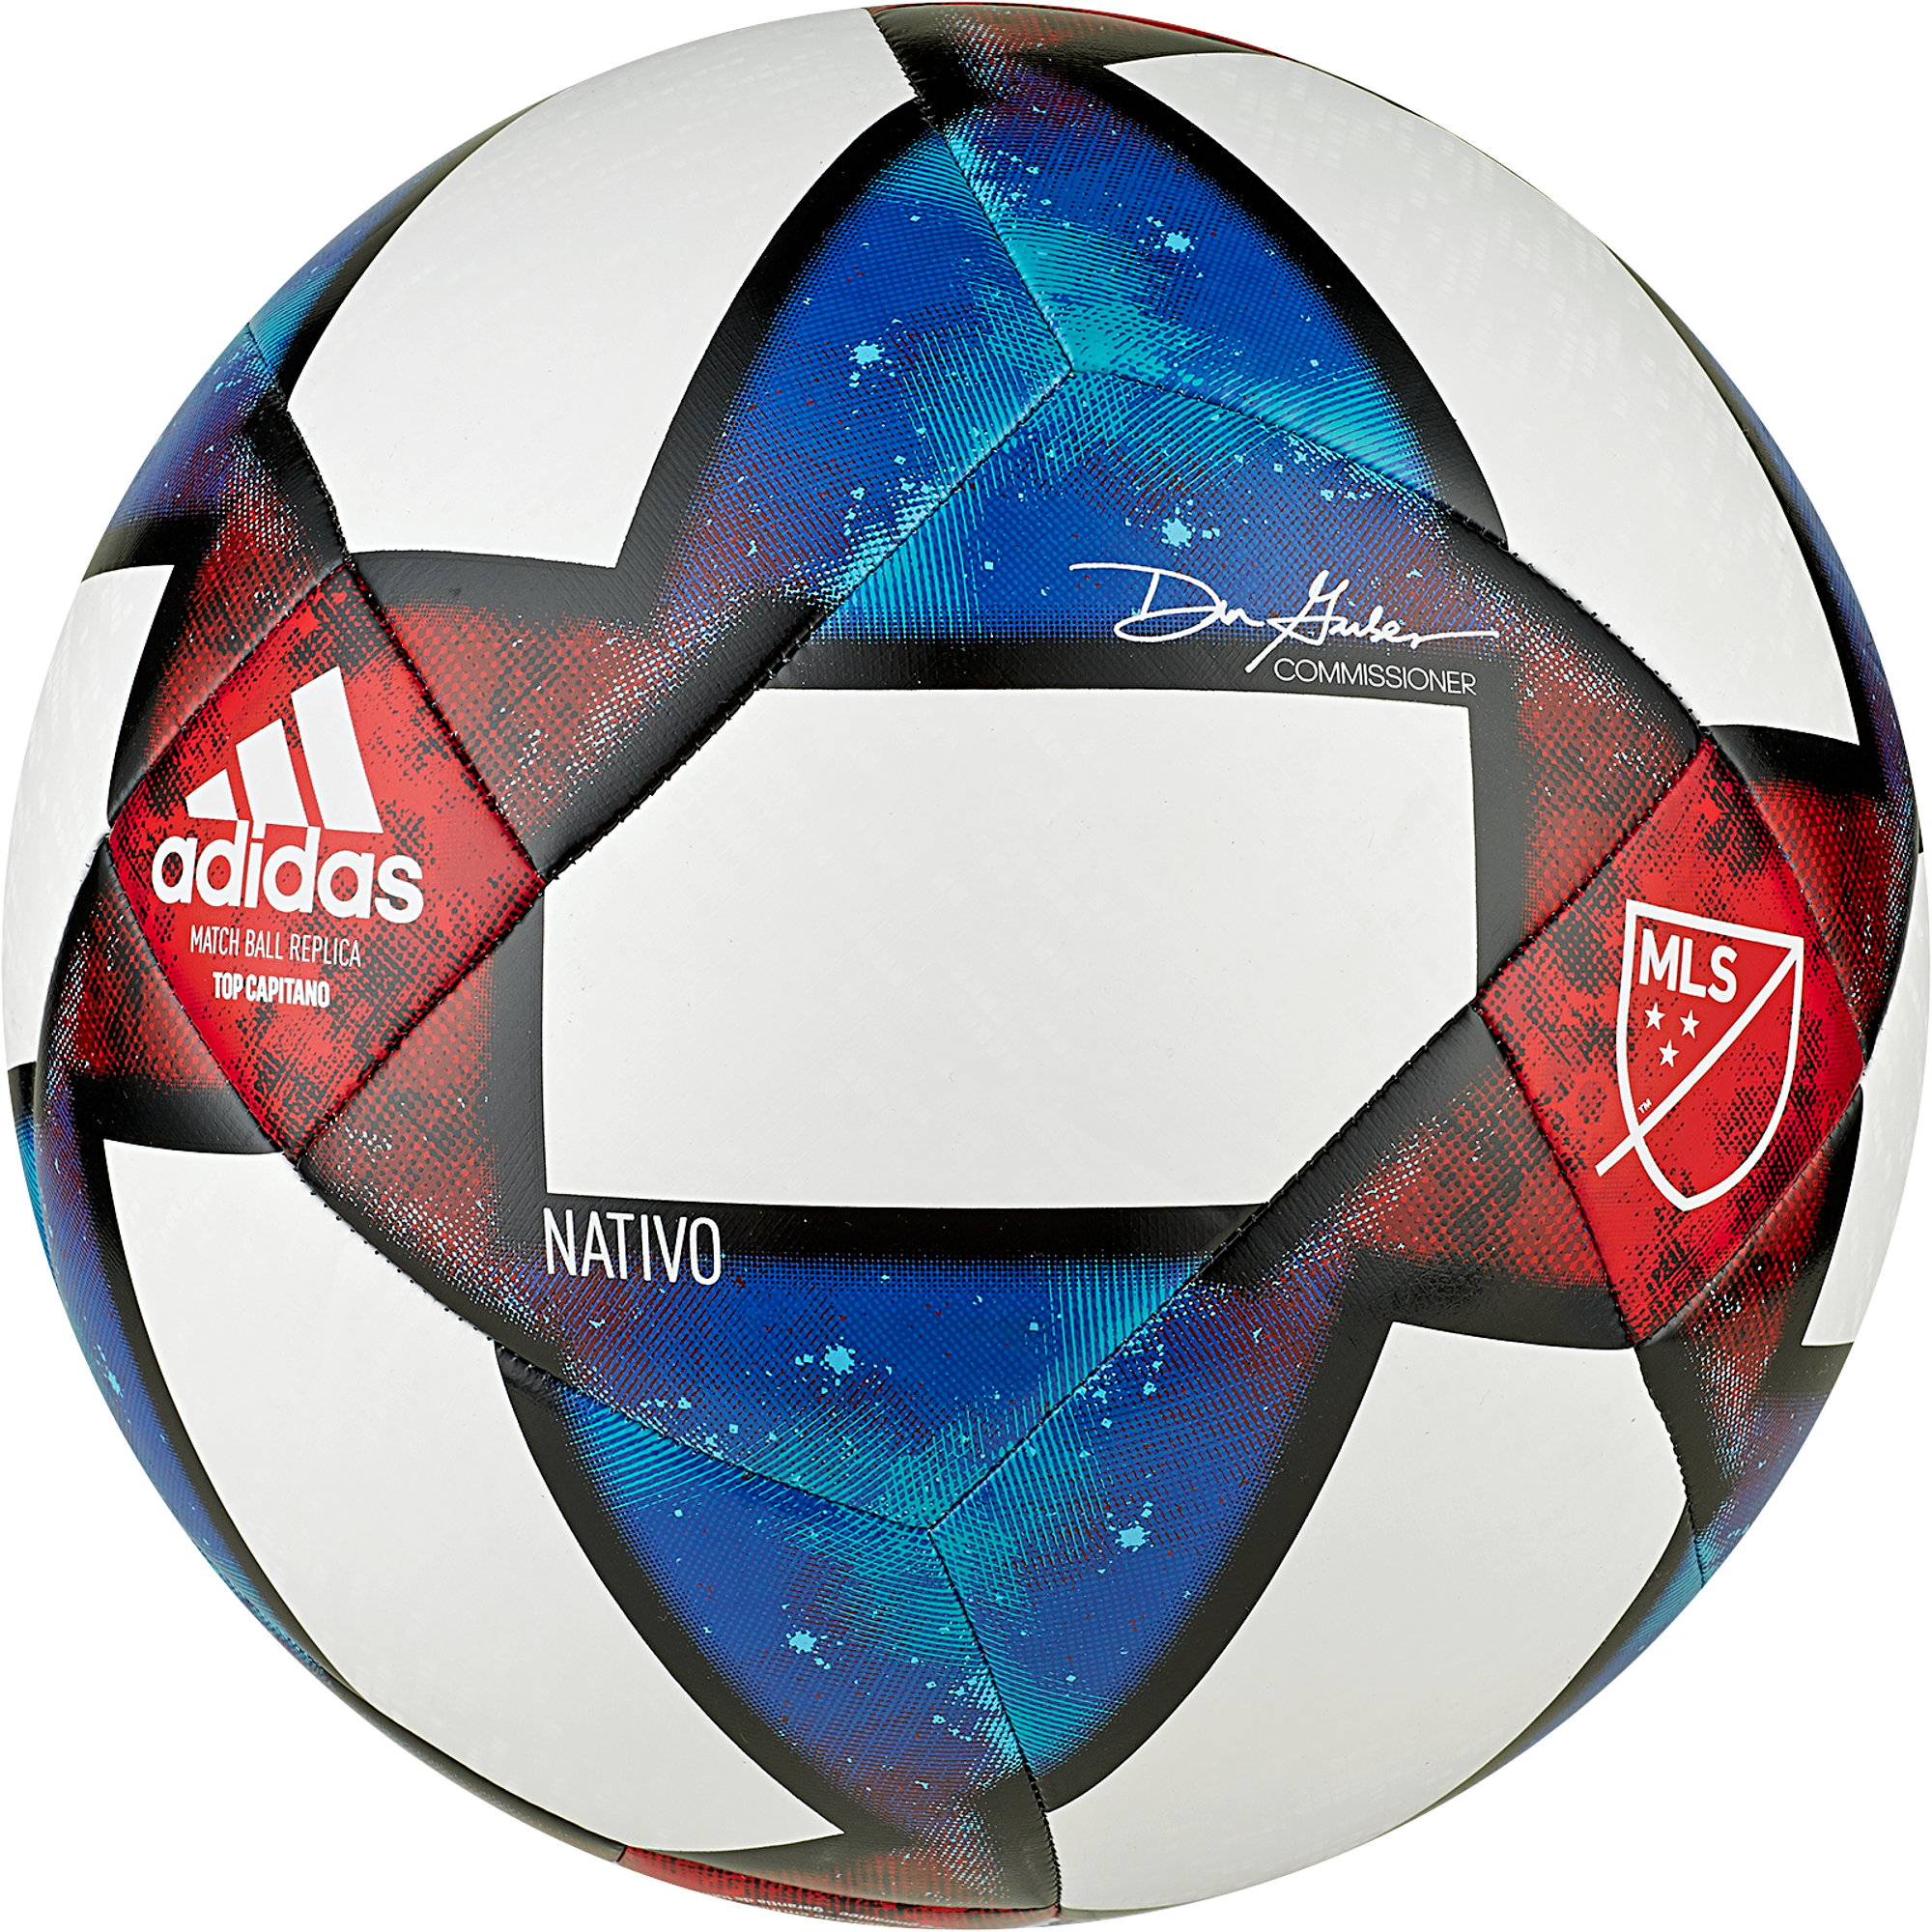 adidas MLS Top Glider Soccer Ball 2019 